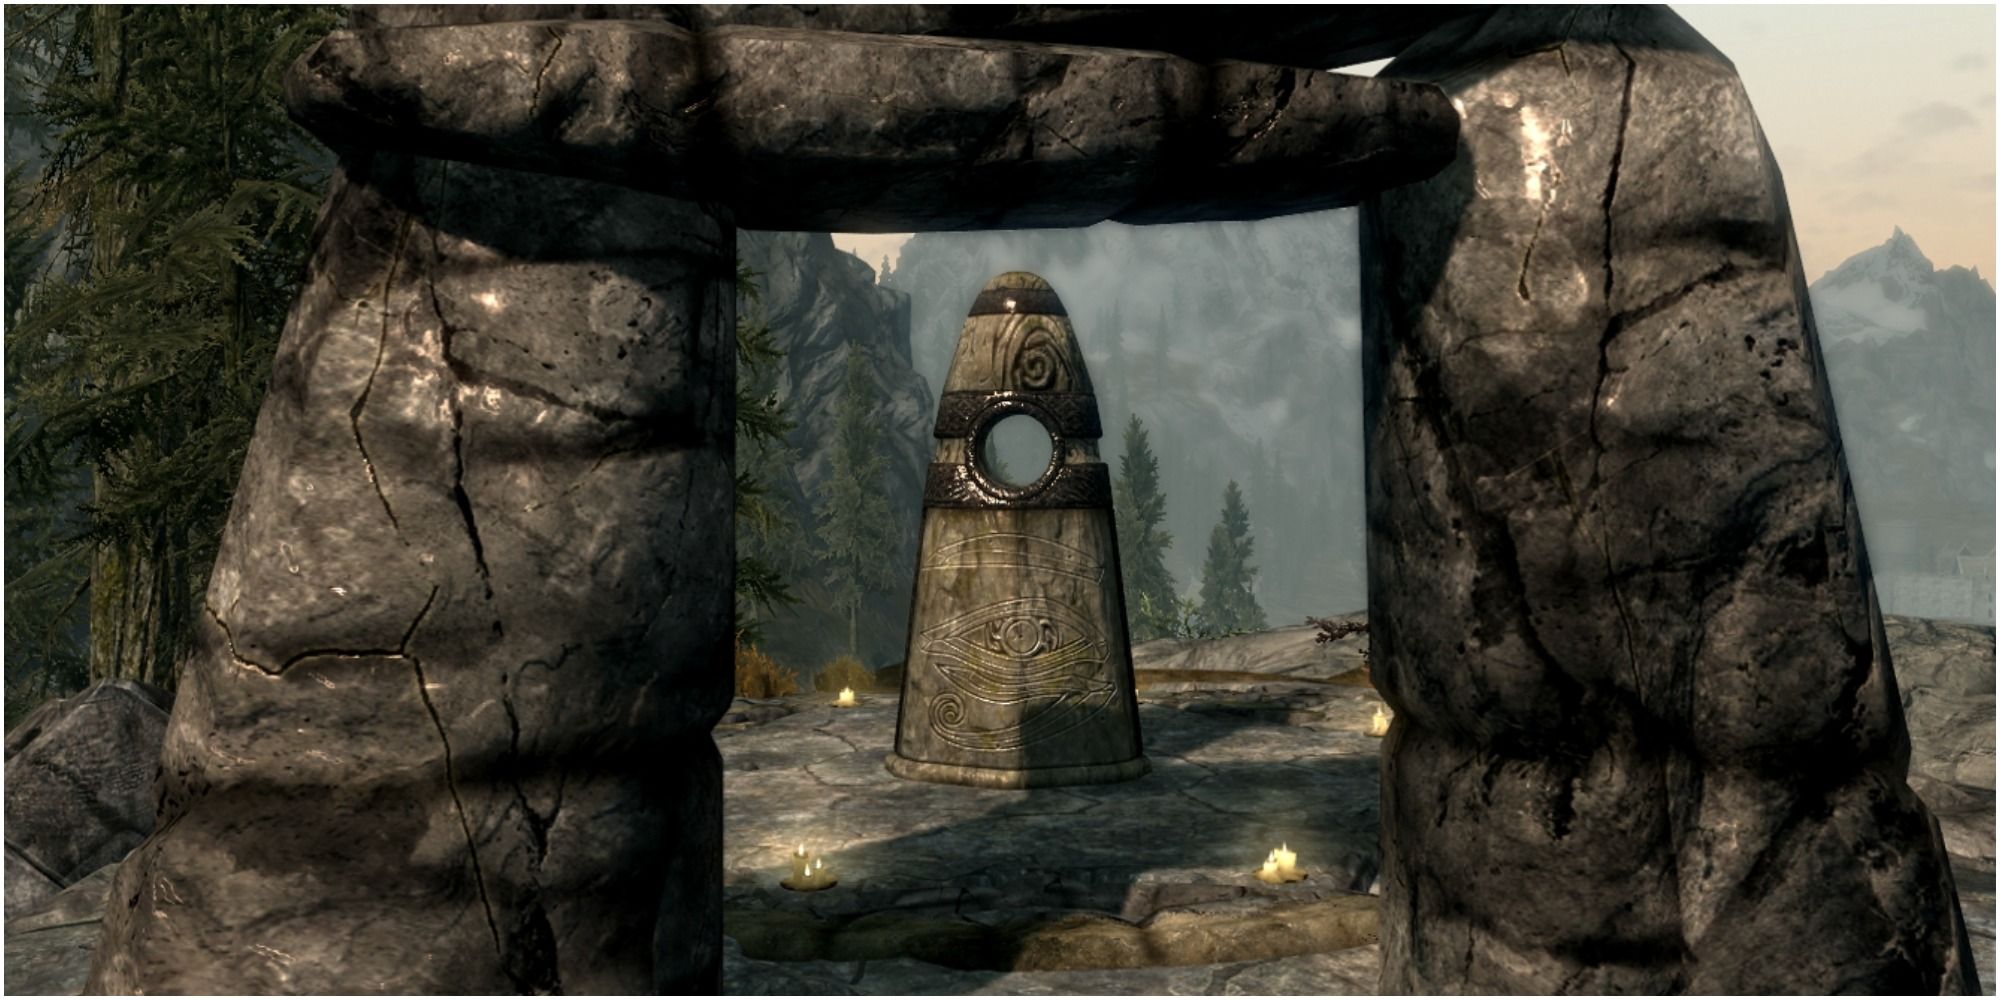 Skyrim stone. The Ritual Stone (Skyrim). Ритуальный камень скайрим. Камень атронаха скайрим. Камень ритуала скайрим.